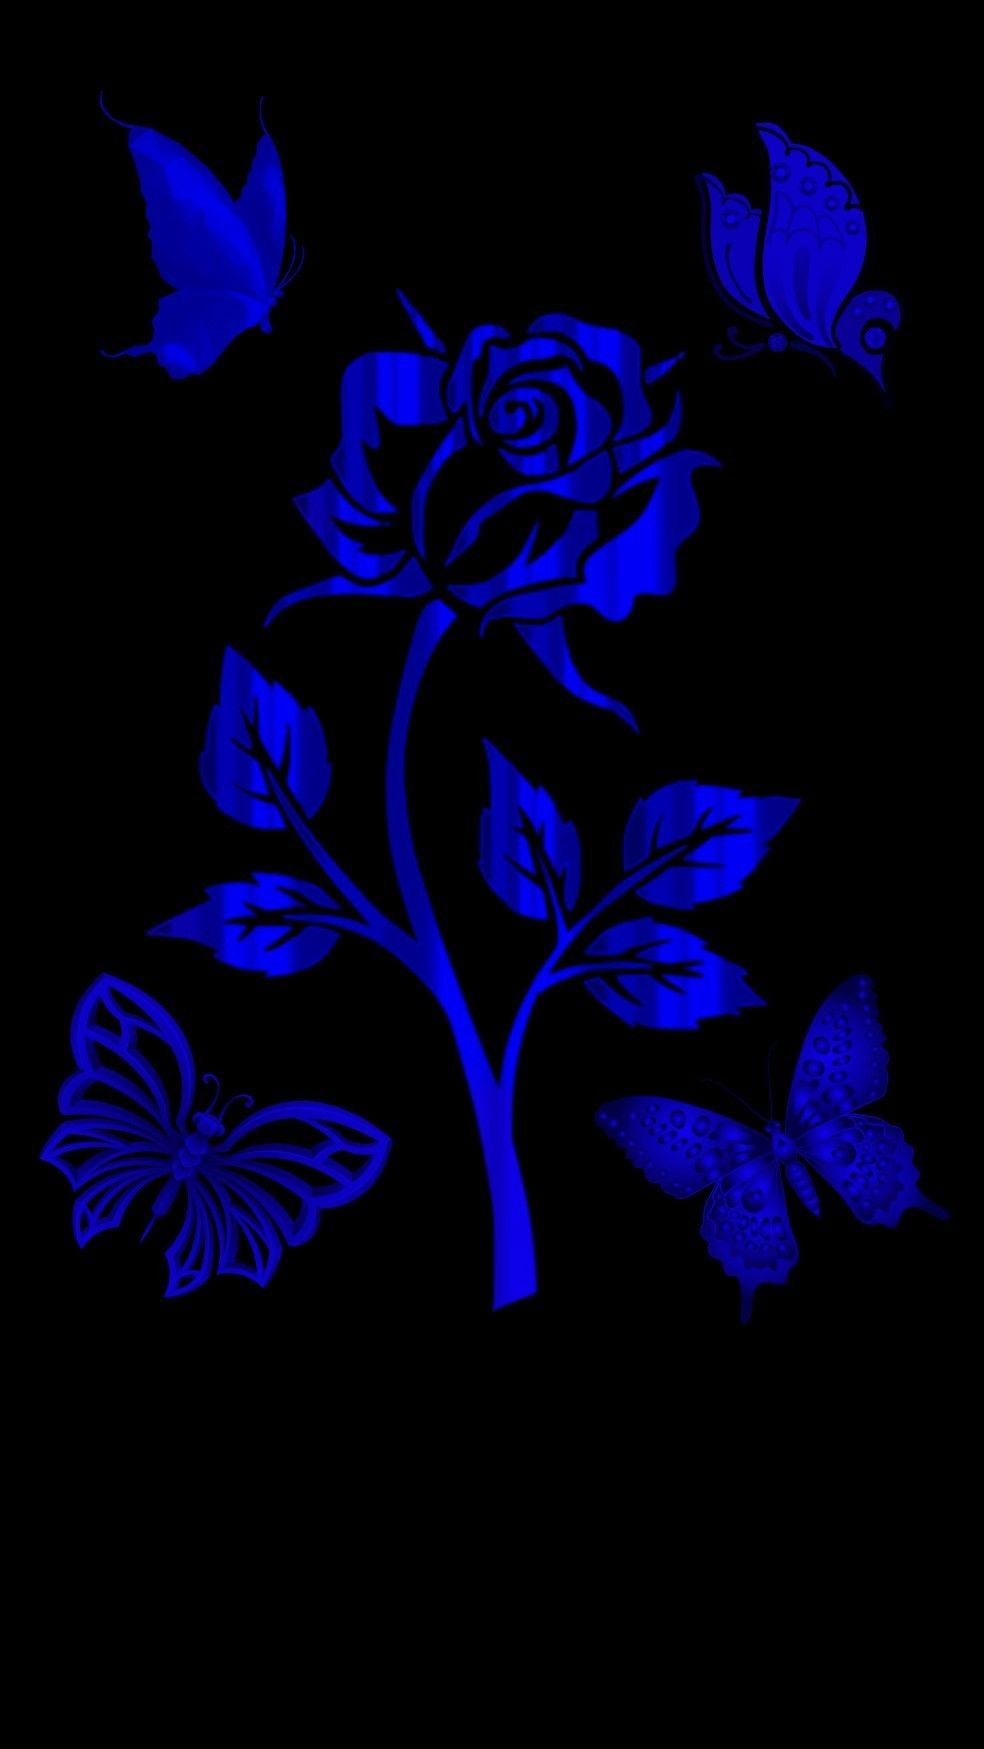 Blue wallpaper. Blue roses wallpaper, Beautiful wallpaper background, Black and blue wallpaper